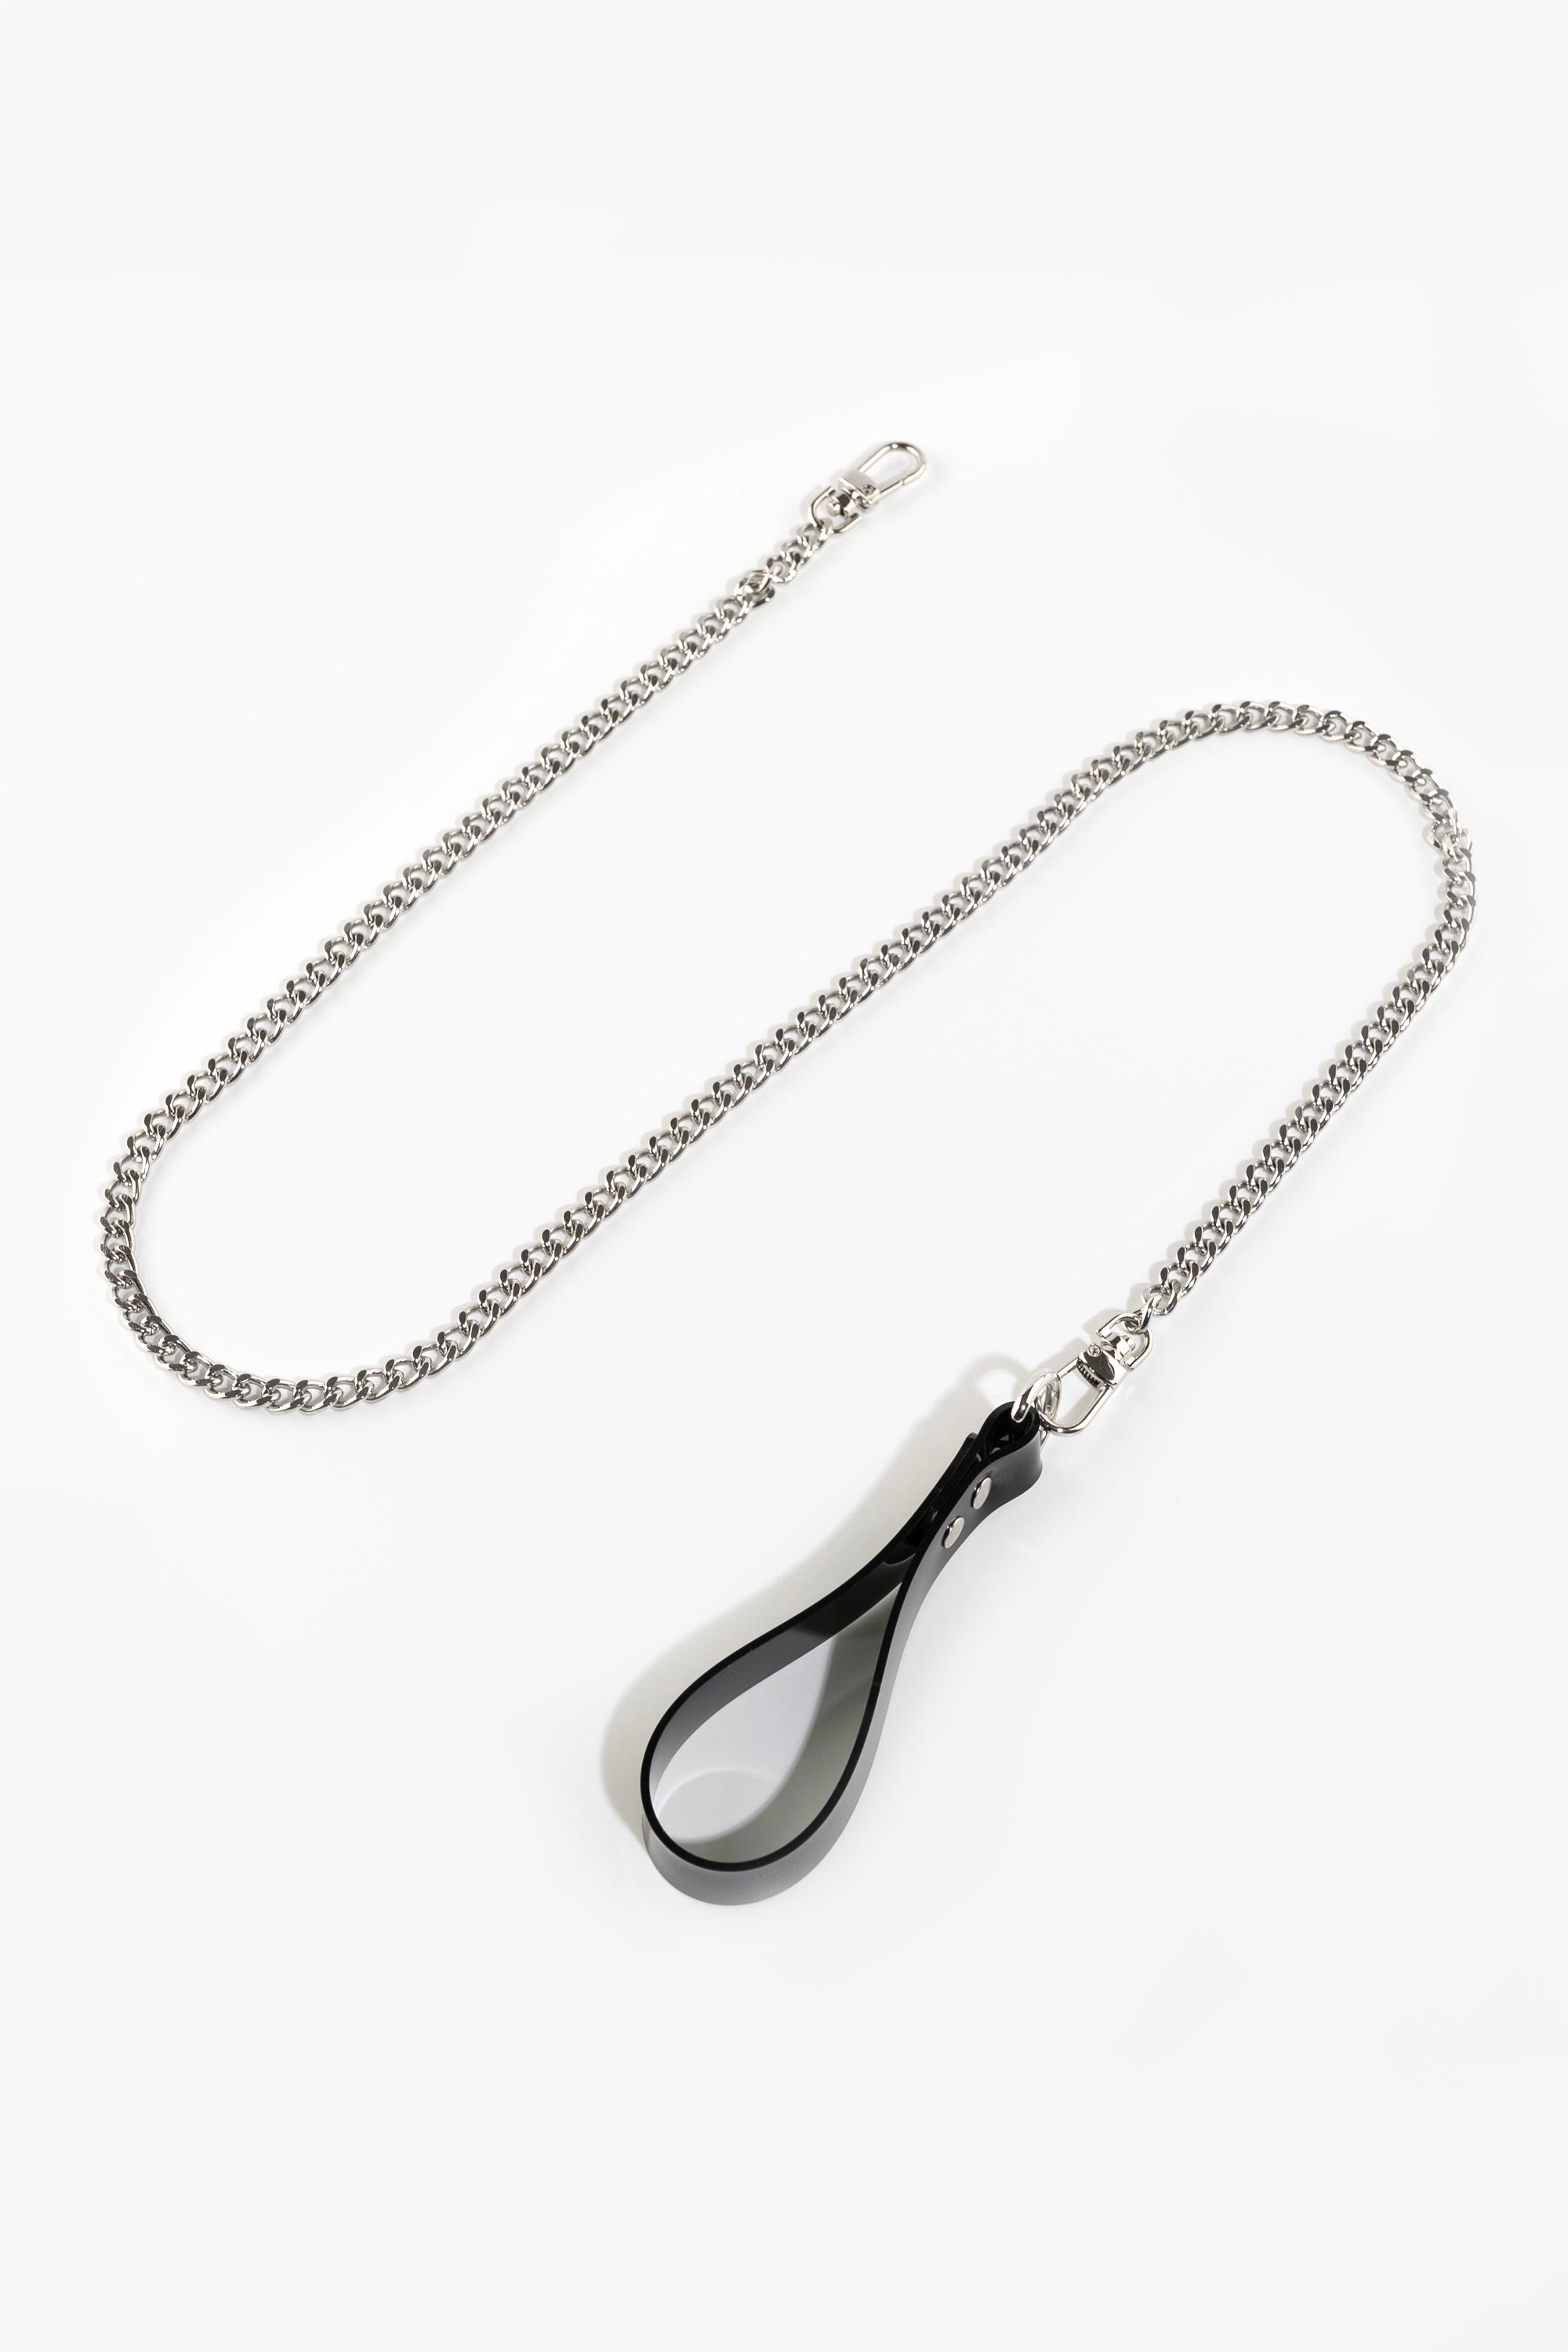 Chain leash with PVC loop, black/chrome